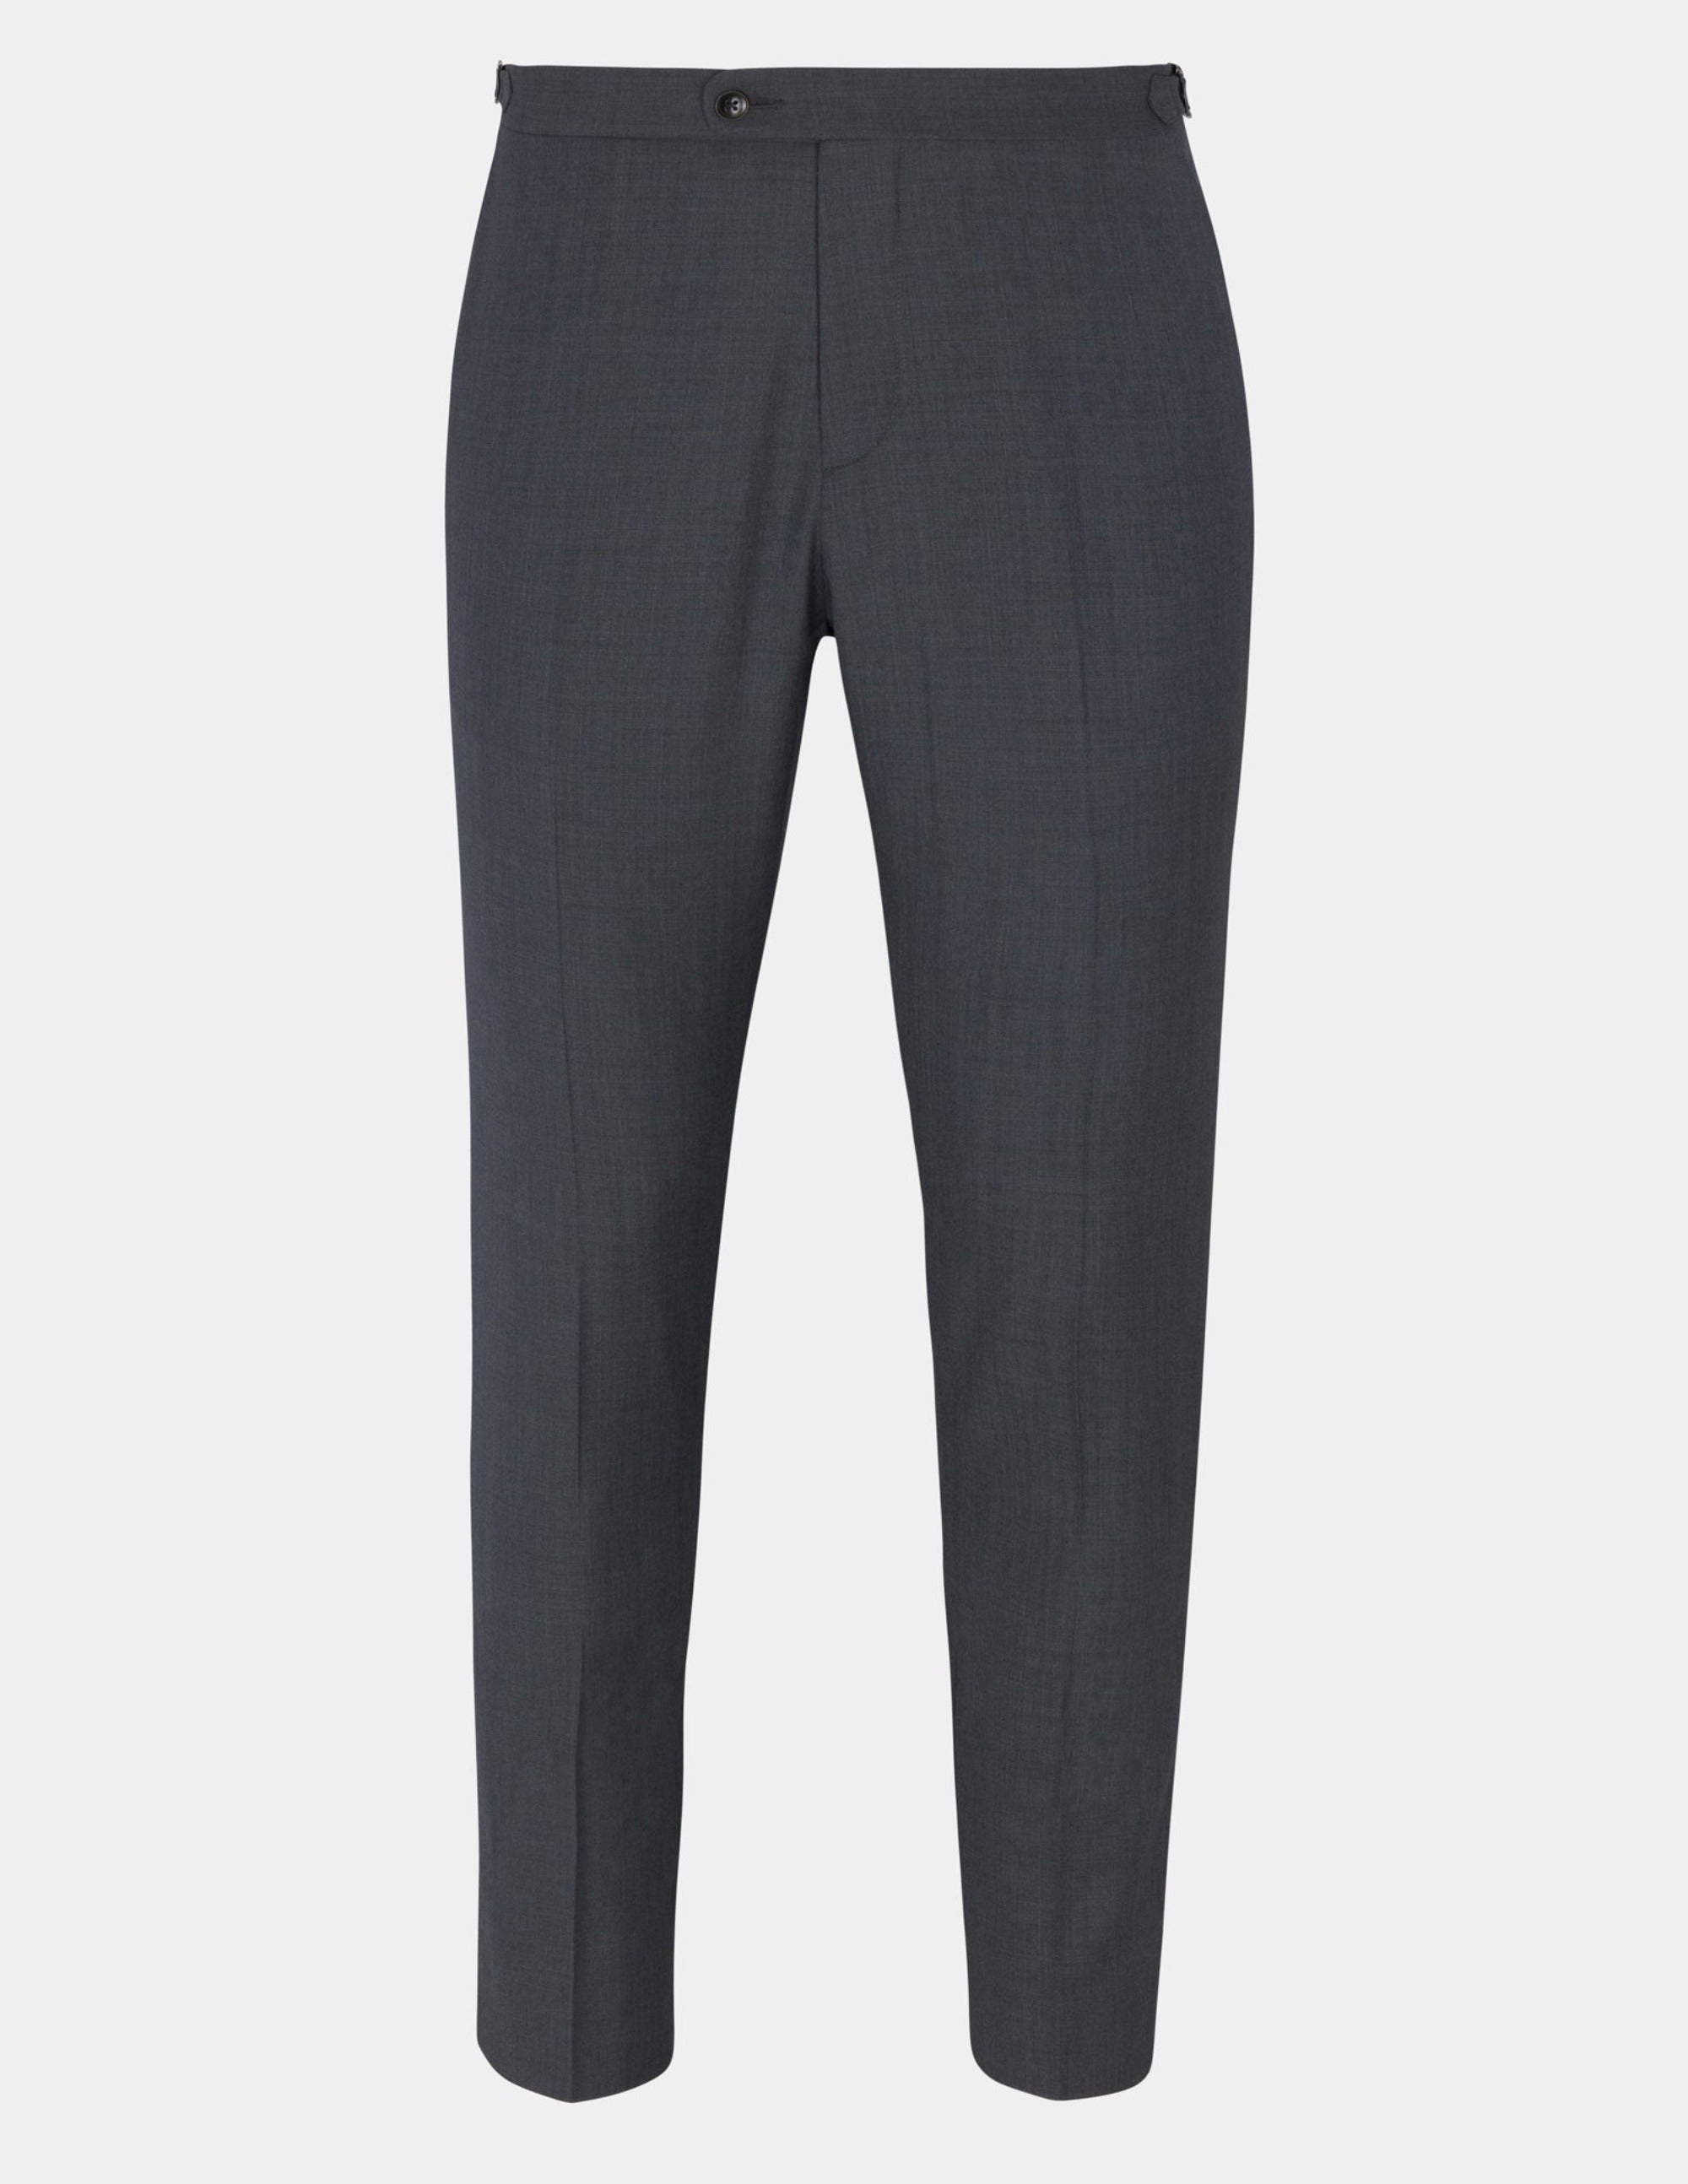 MASSIMO DUTTI Super 120's Wool Trousers Men's US 30 Slim Fit Dark Blue |  eBay